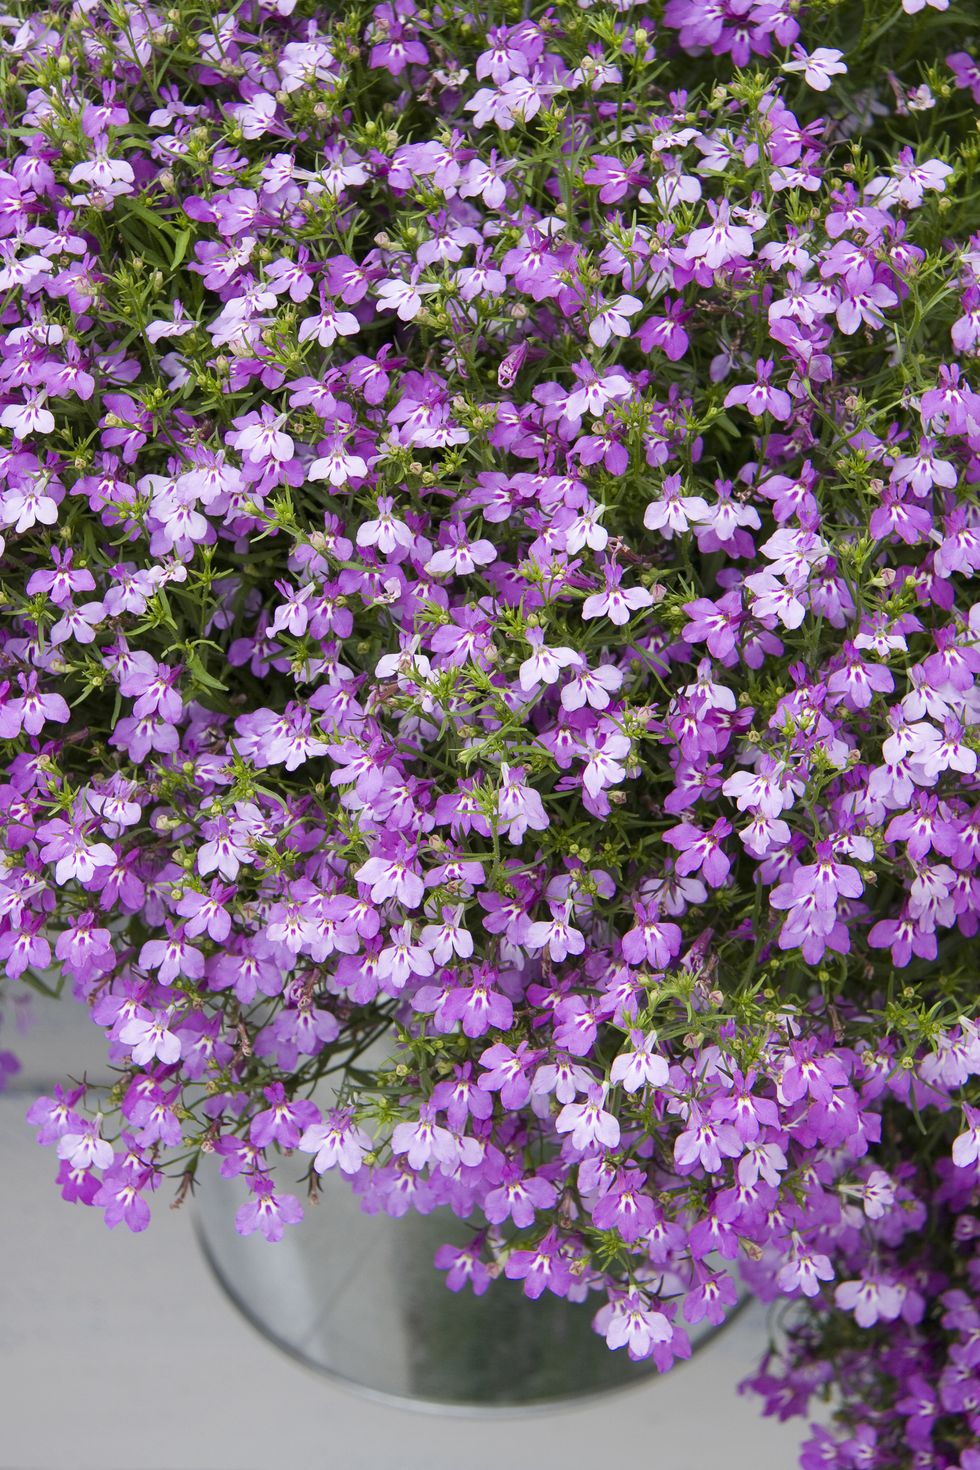 Flower, Flowering plant, Purple, Plant, Violet, Lavender, Groundcover, Breckland thyme, Aubretia, Bellflower, 